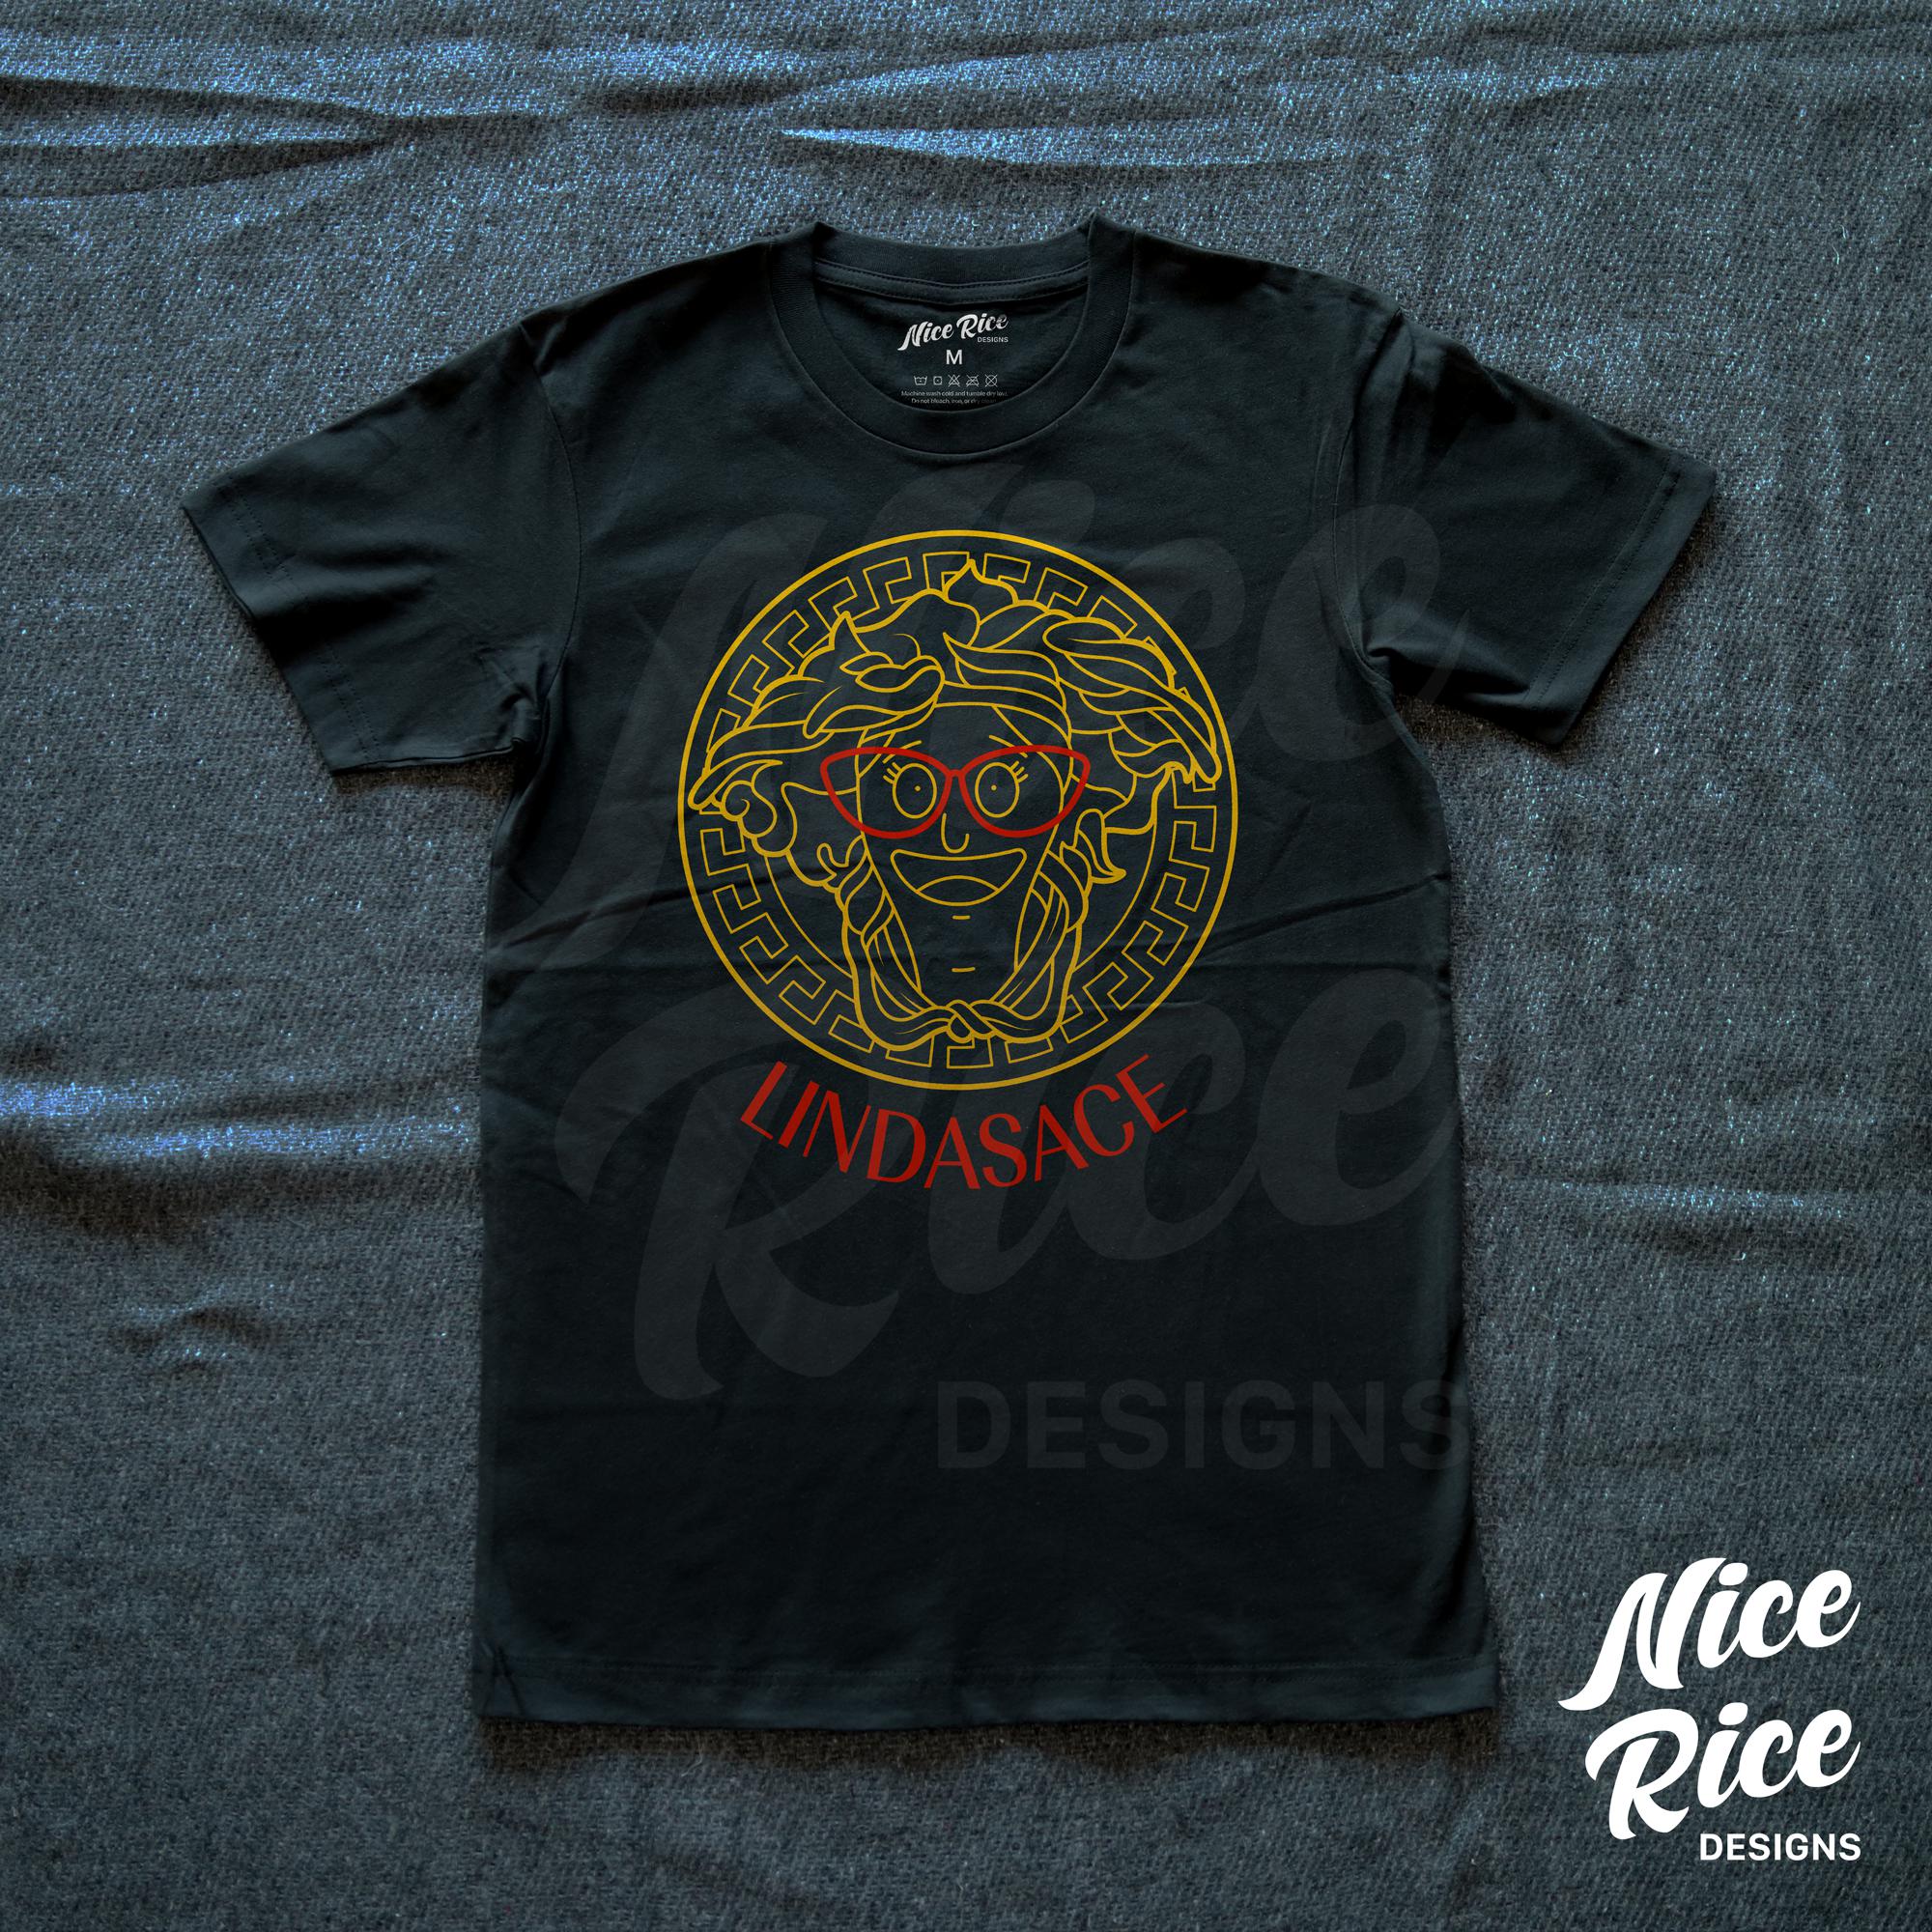 Lindasace Shirt by Nice Rice Designs